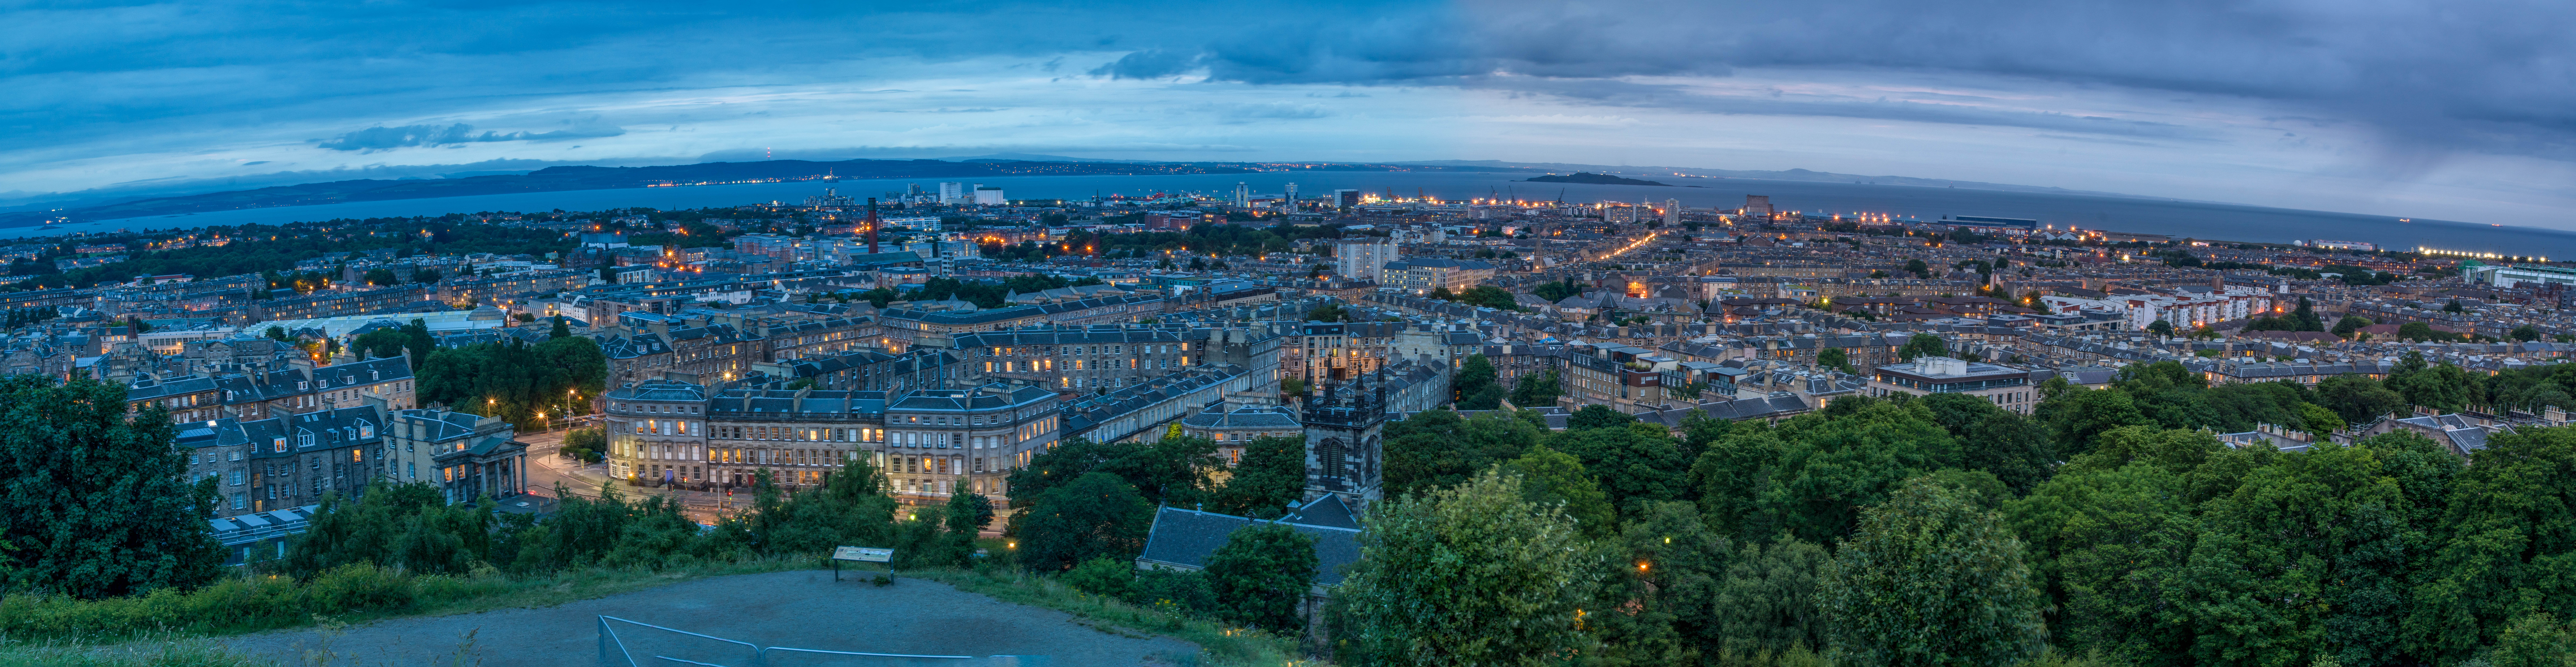 Edinburgh Panorama.jpg